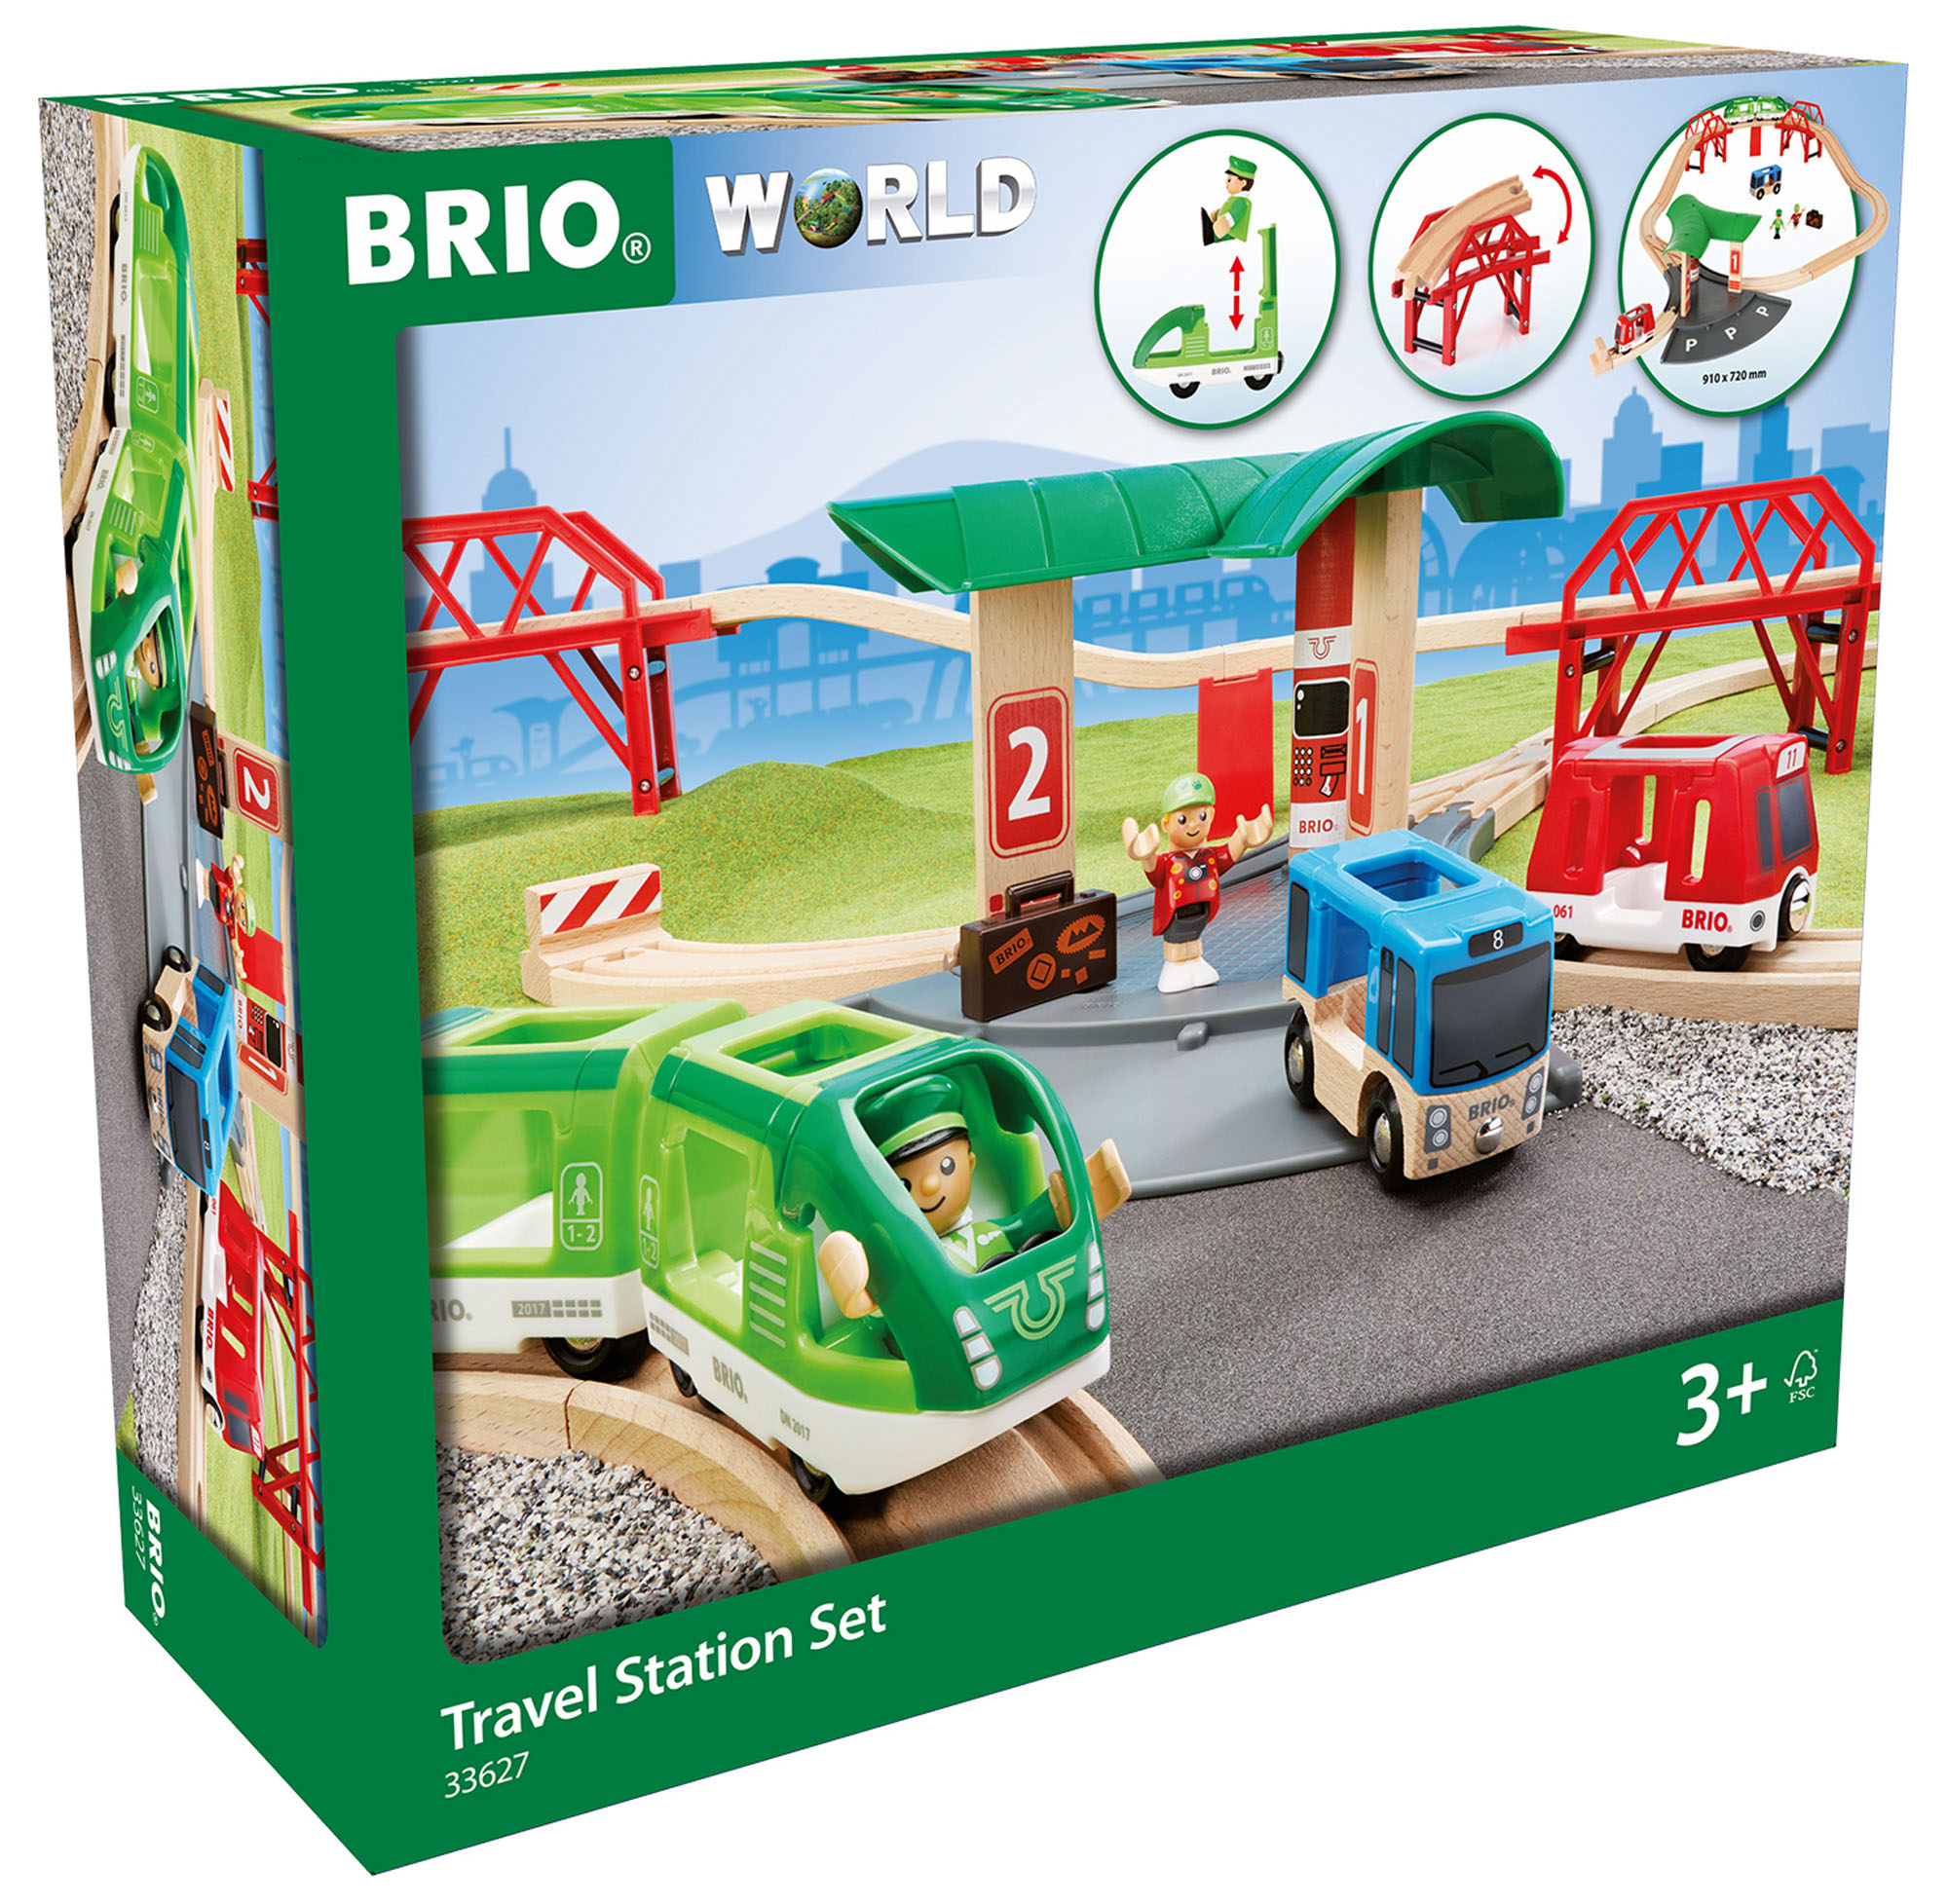 33627 BRIO Travel Station Set